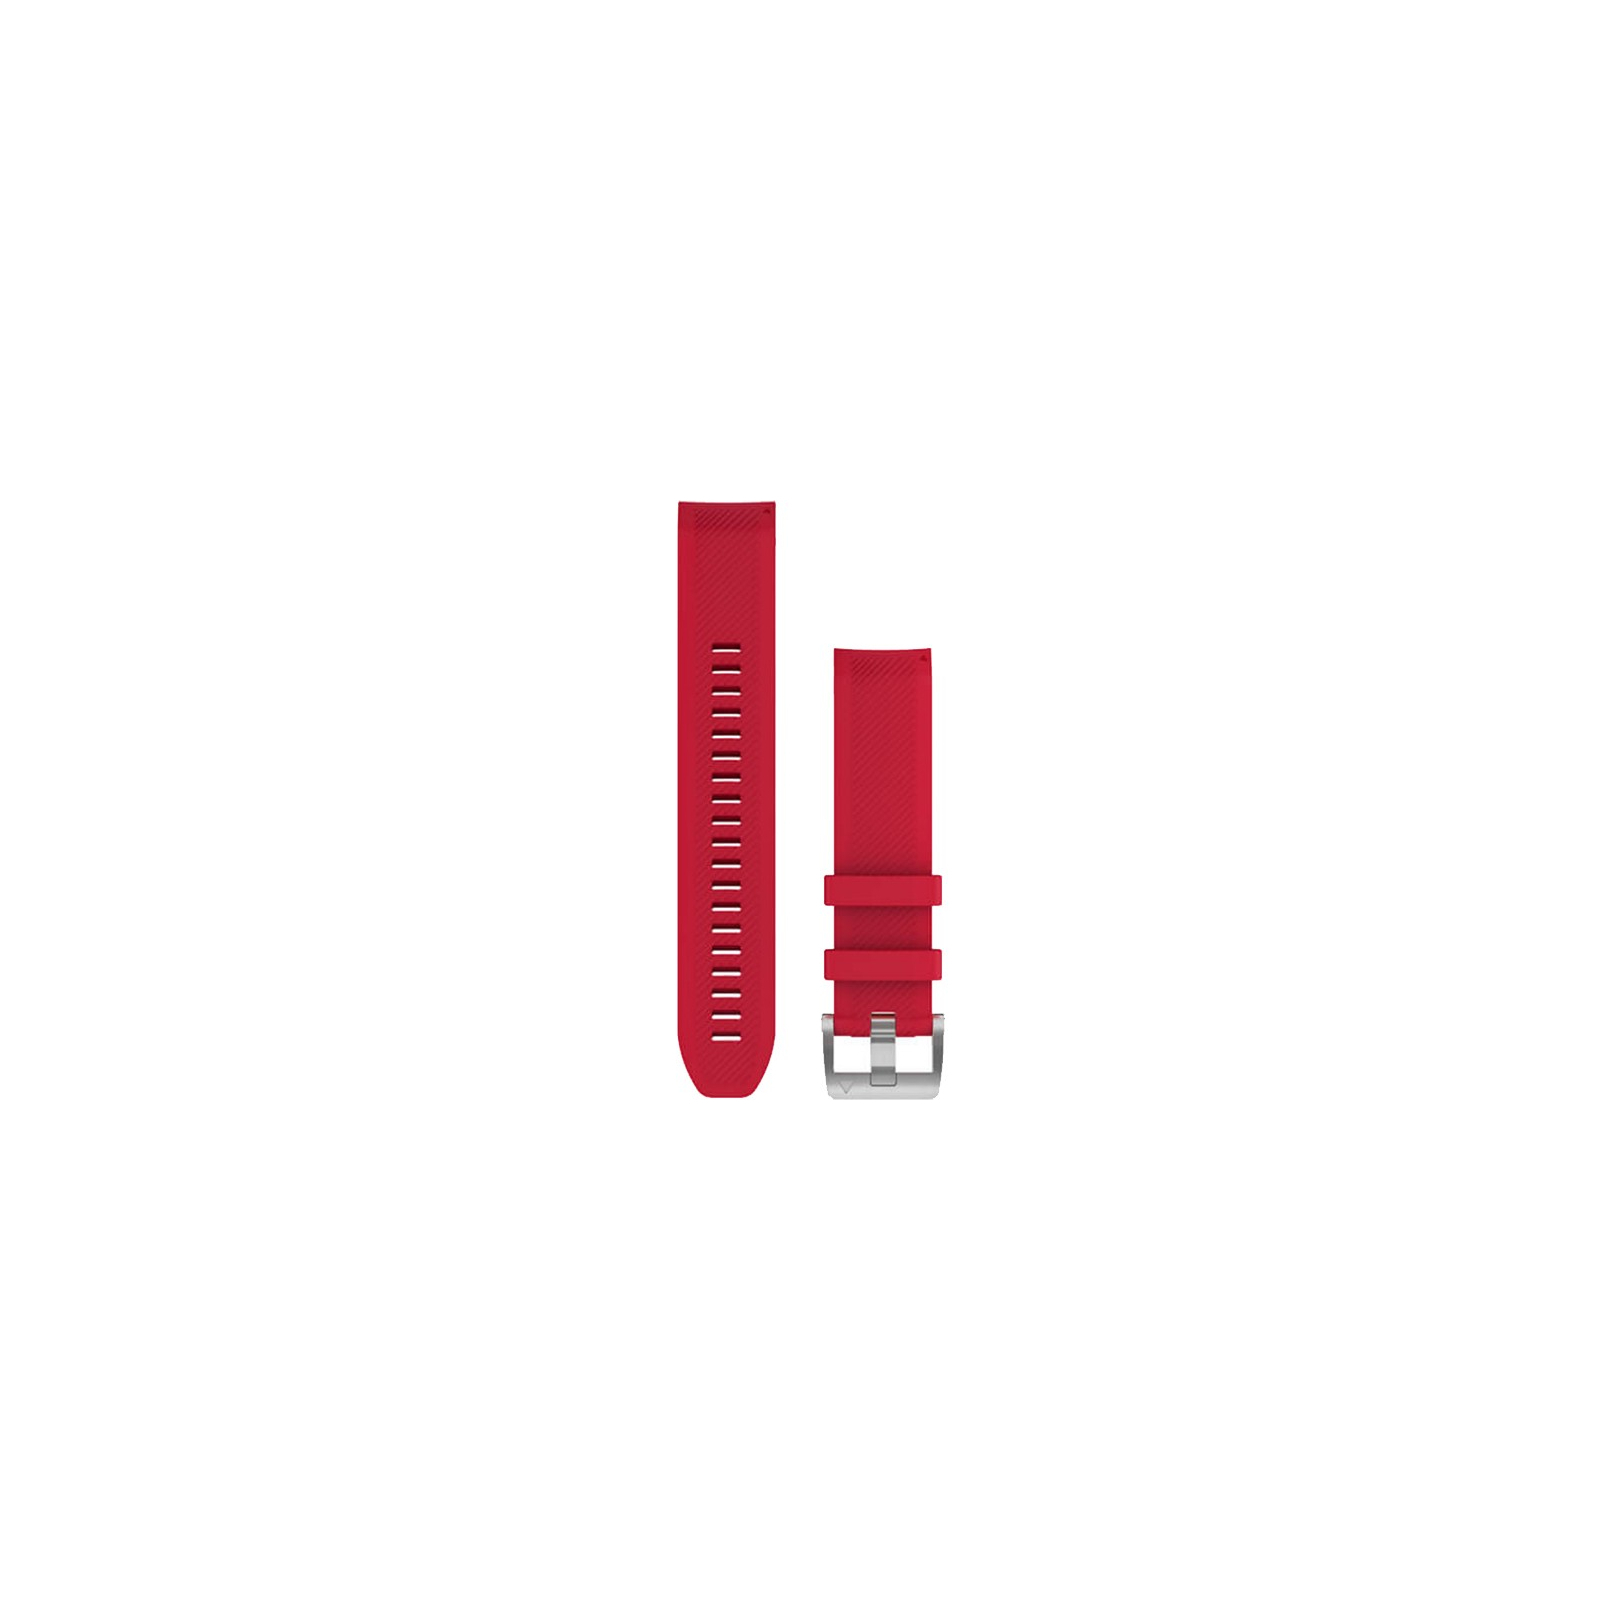 Ремешок для смарт-часов Garmin MARQ, QuickFit 22m, Plasma Red, Silicone Strap (010-12738-17)